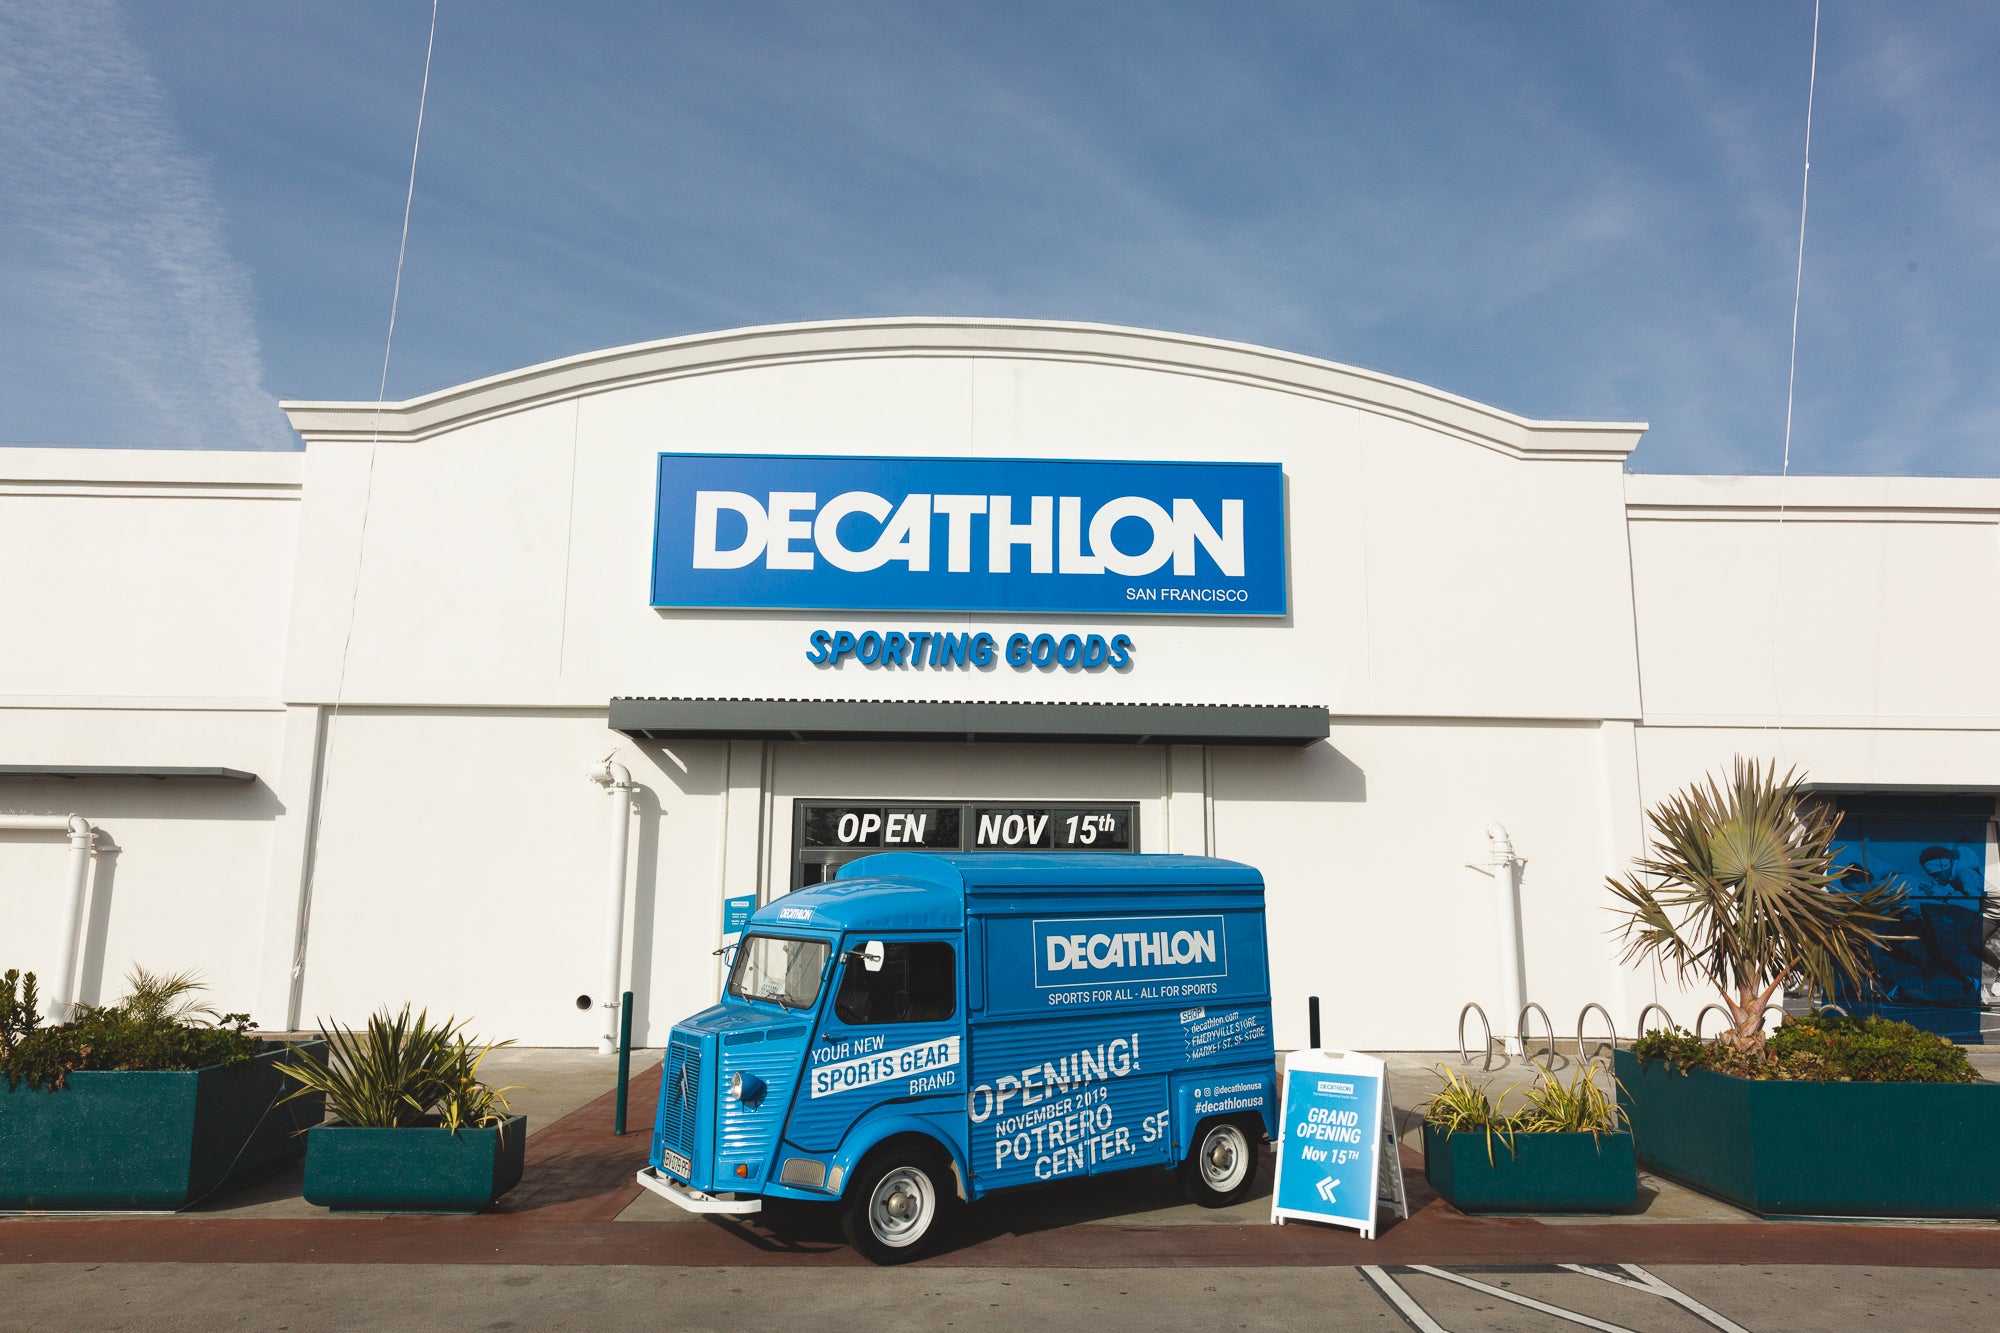 the decathlon store